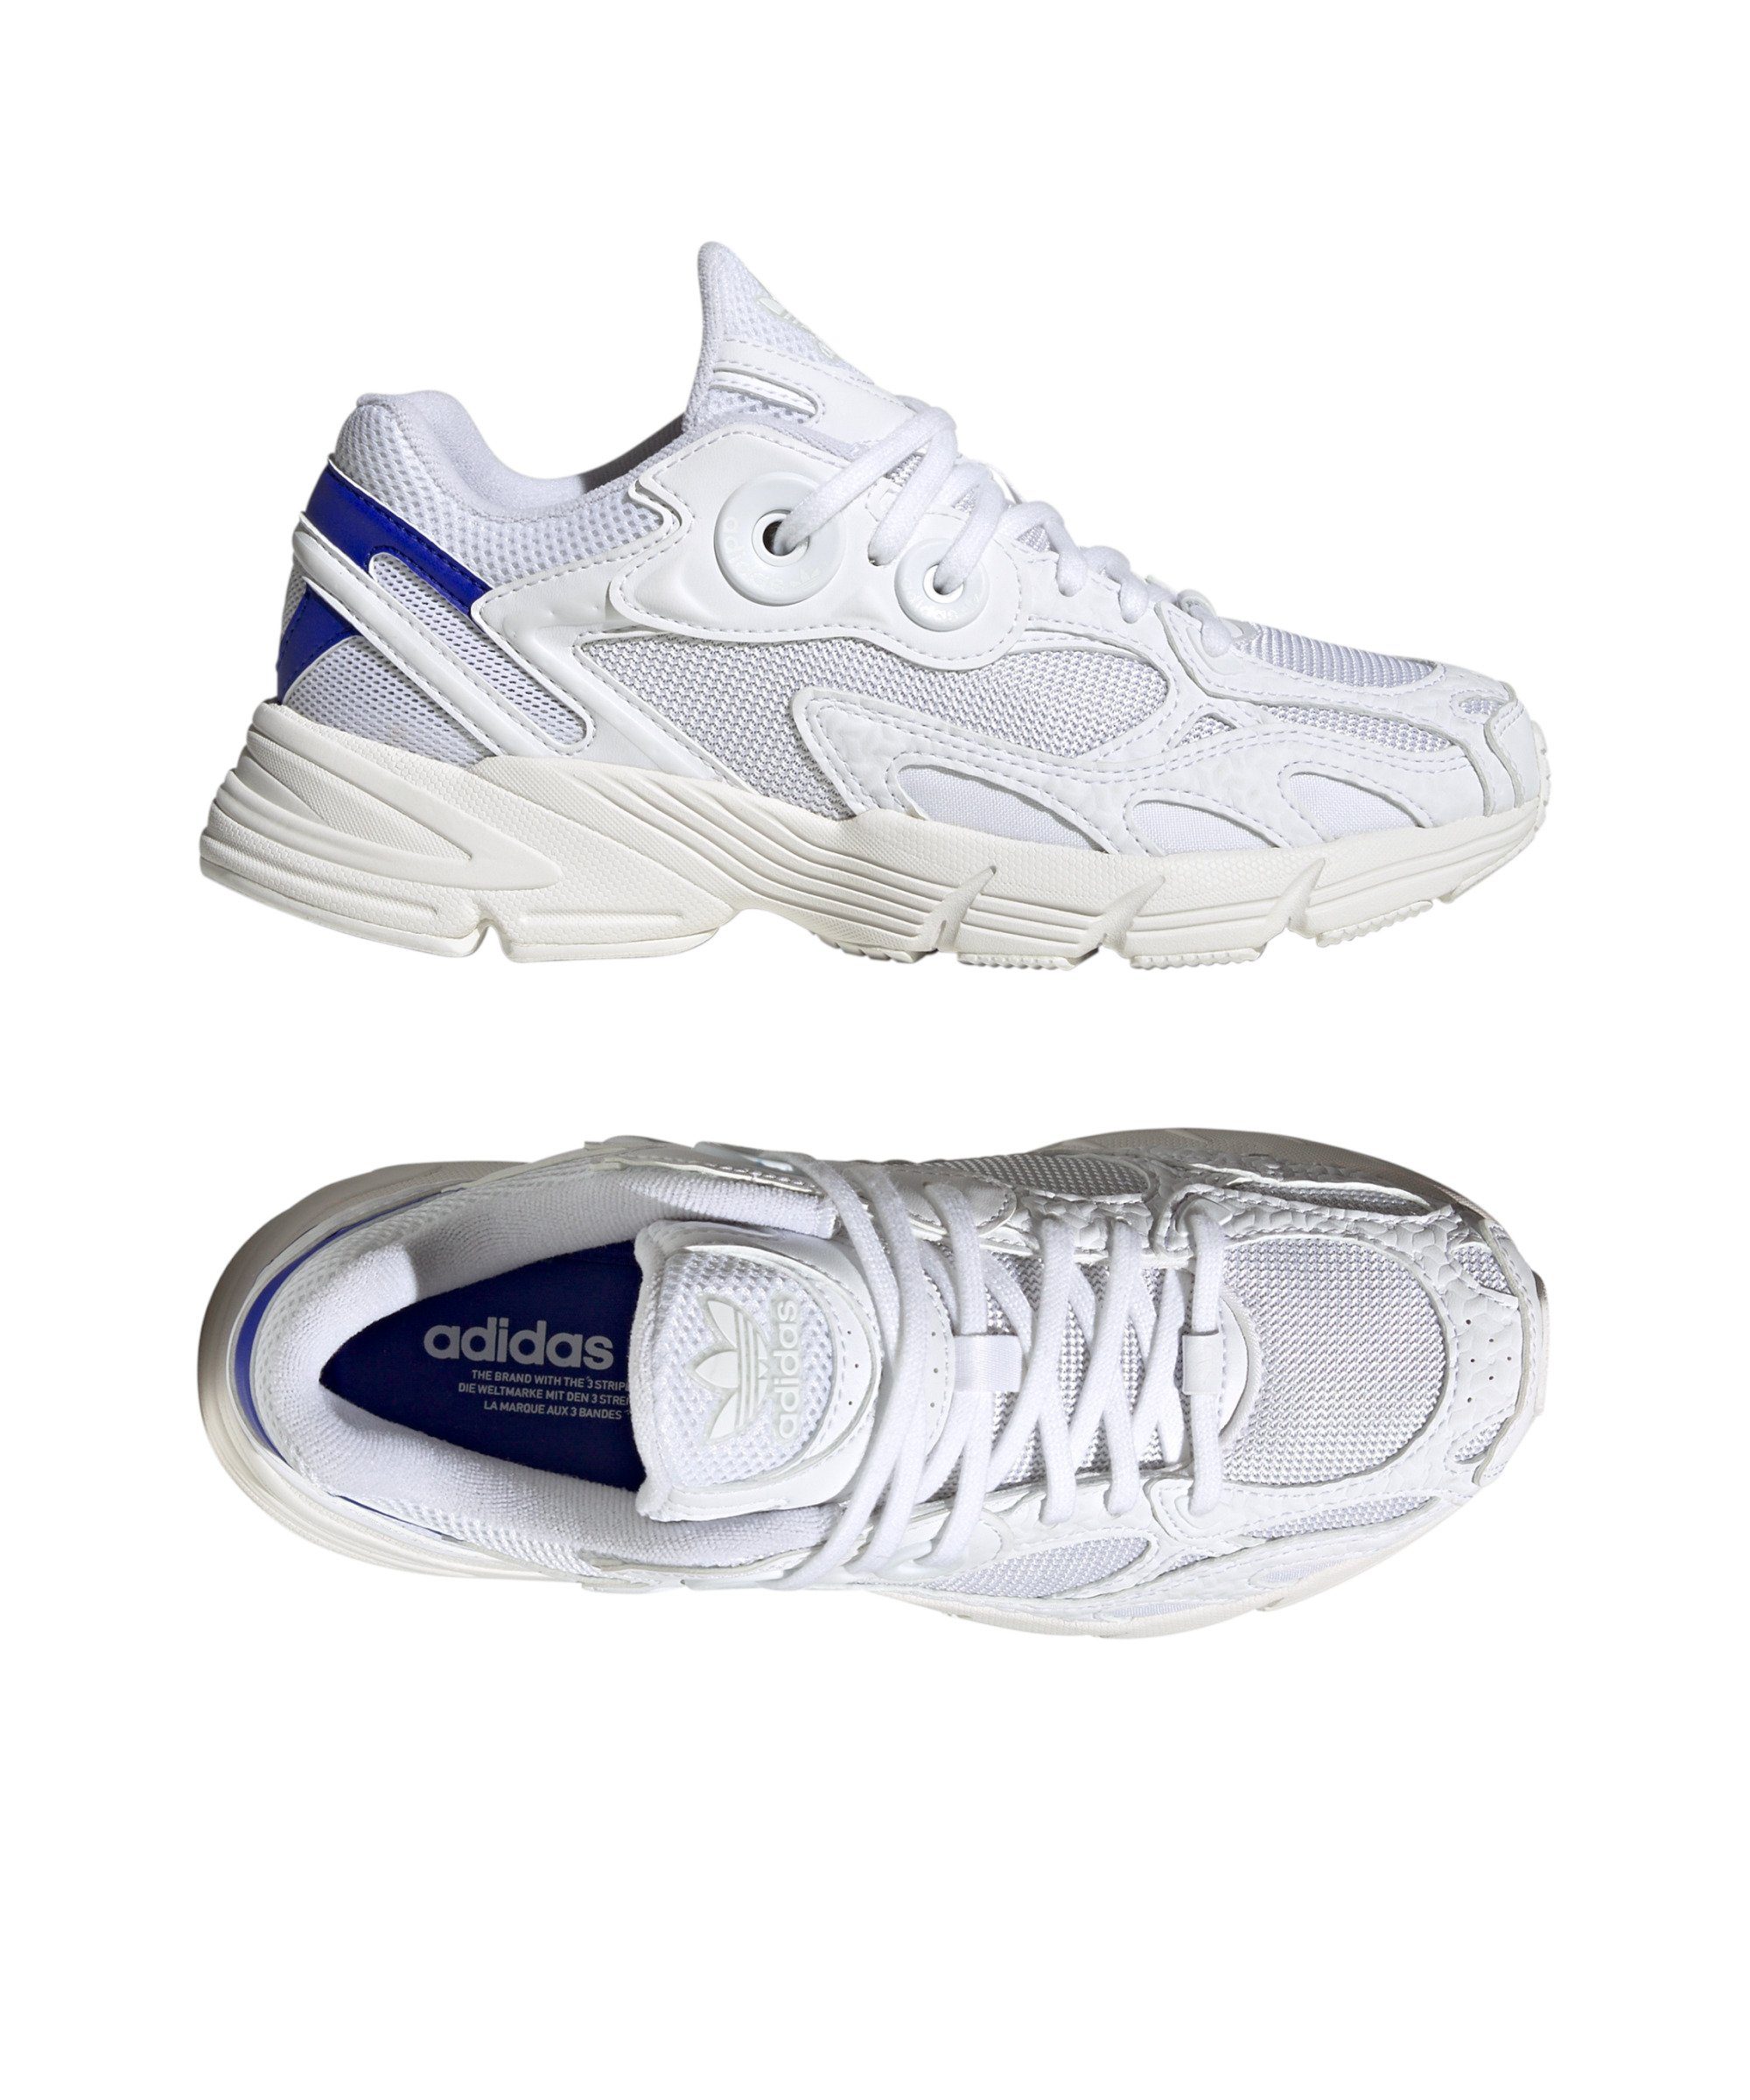 adidas Originals Damen Astir weissblau Sneaker